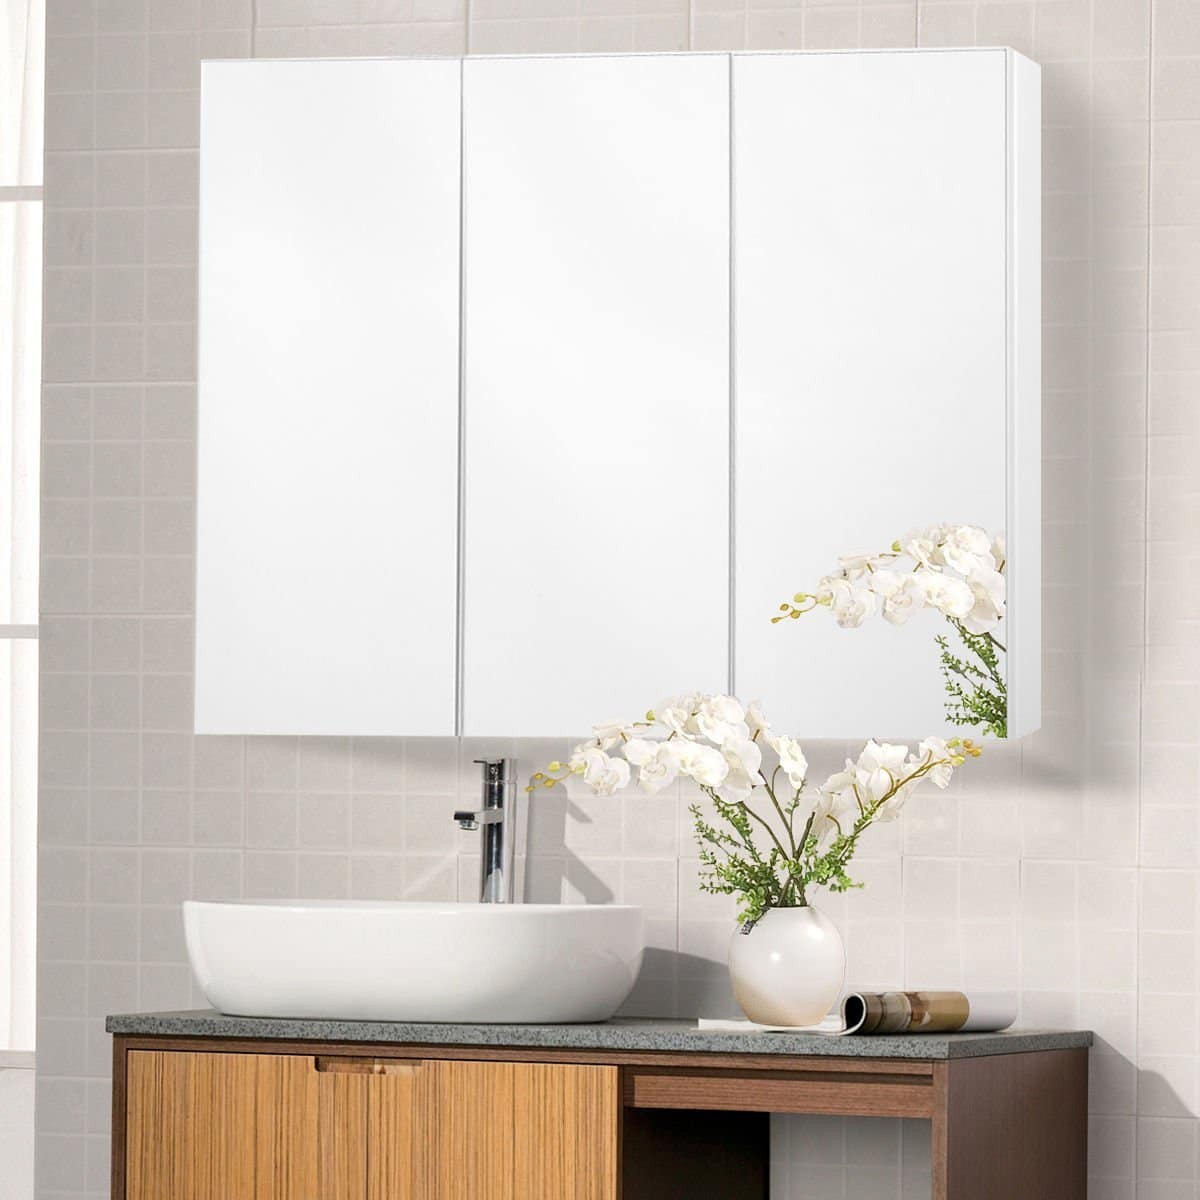 Bathroom Cabinet Mirror
 Top 10 Best Mirror Medicine Cabinets in 2019